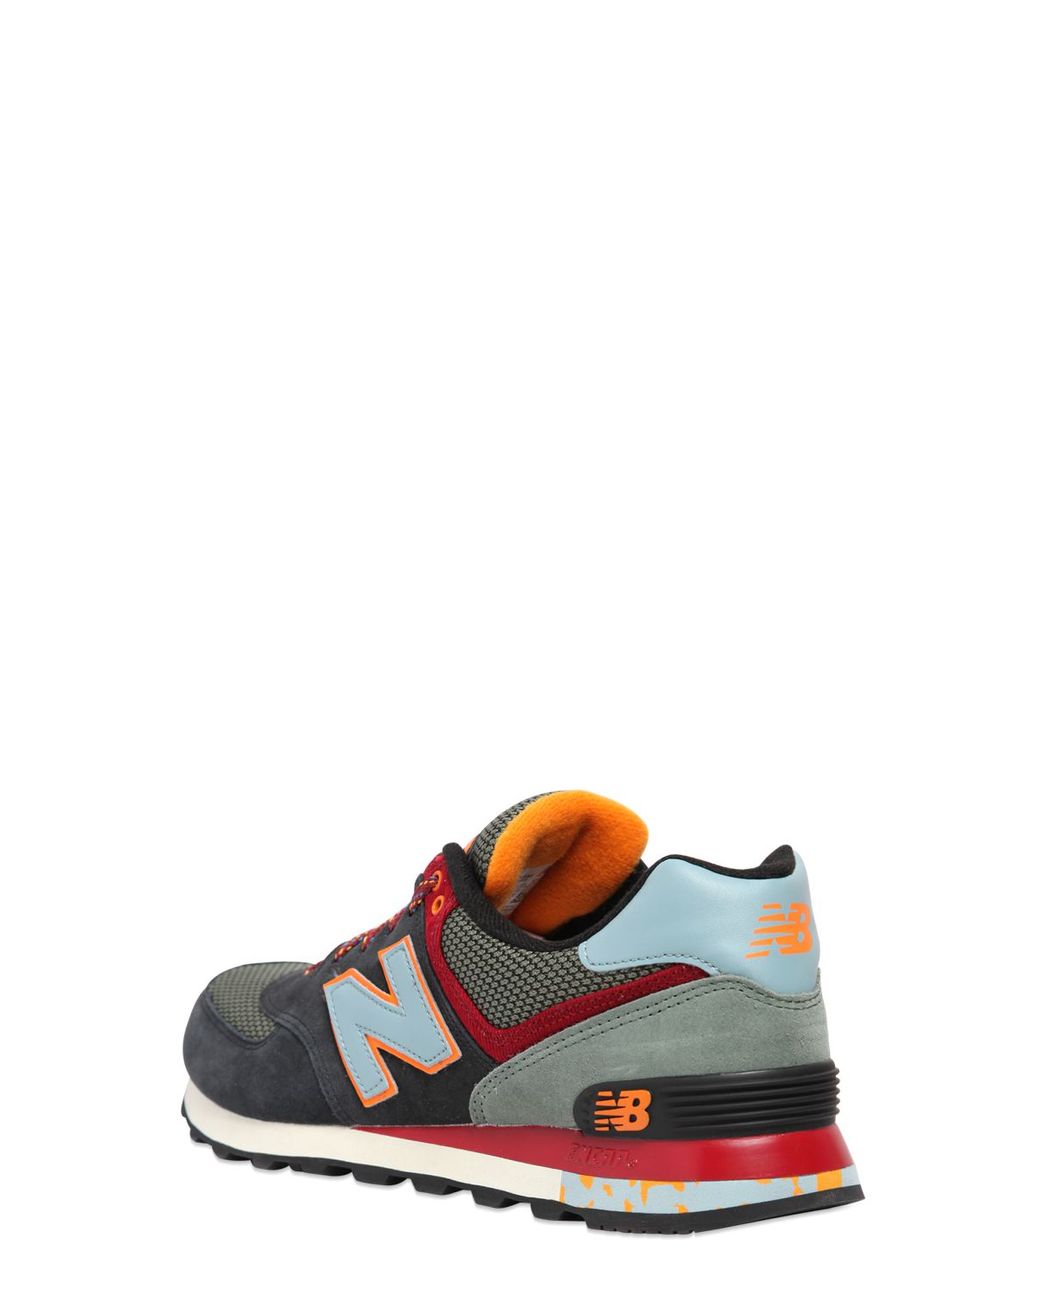 New Balance 574 Suede & Cordura Sneakers | Lyst